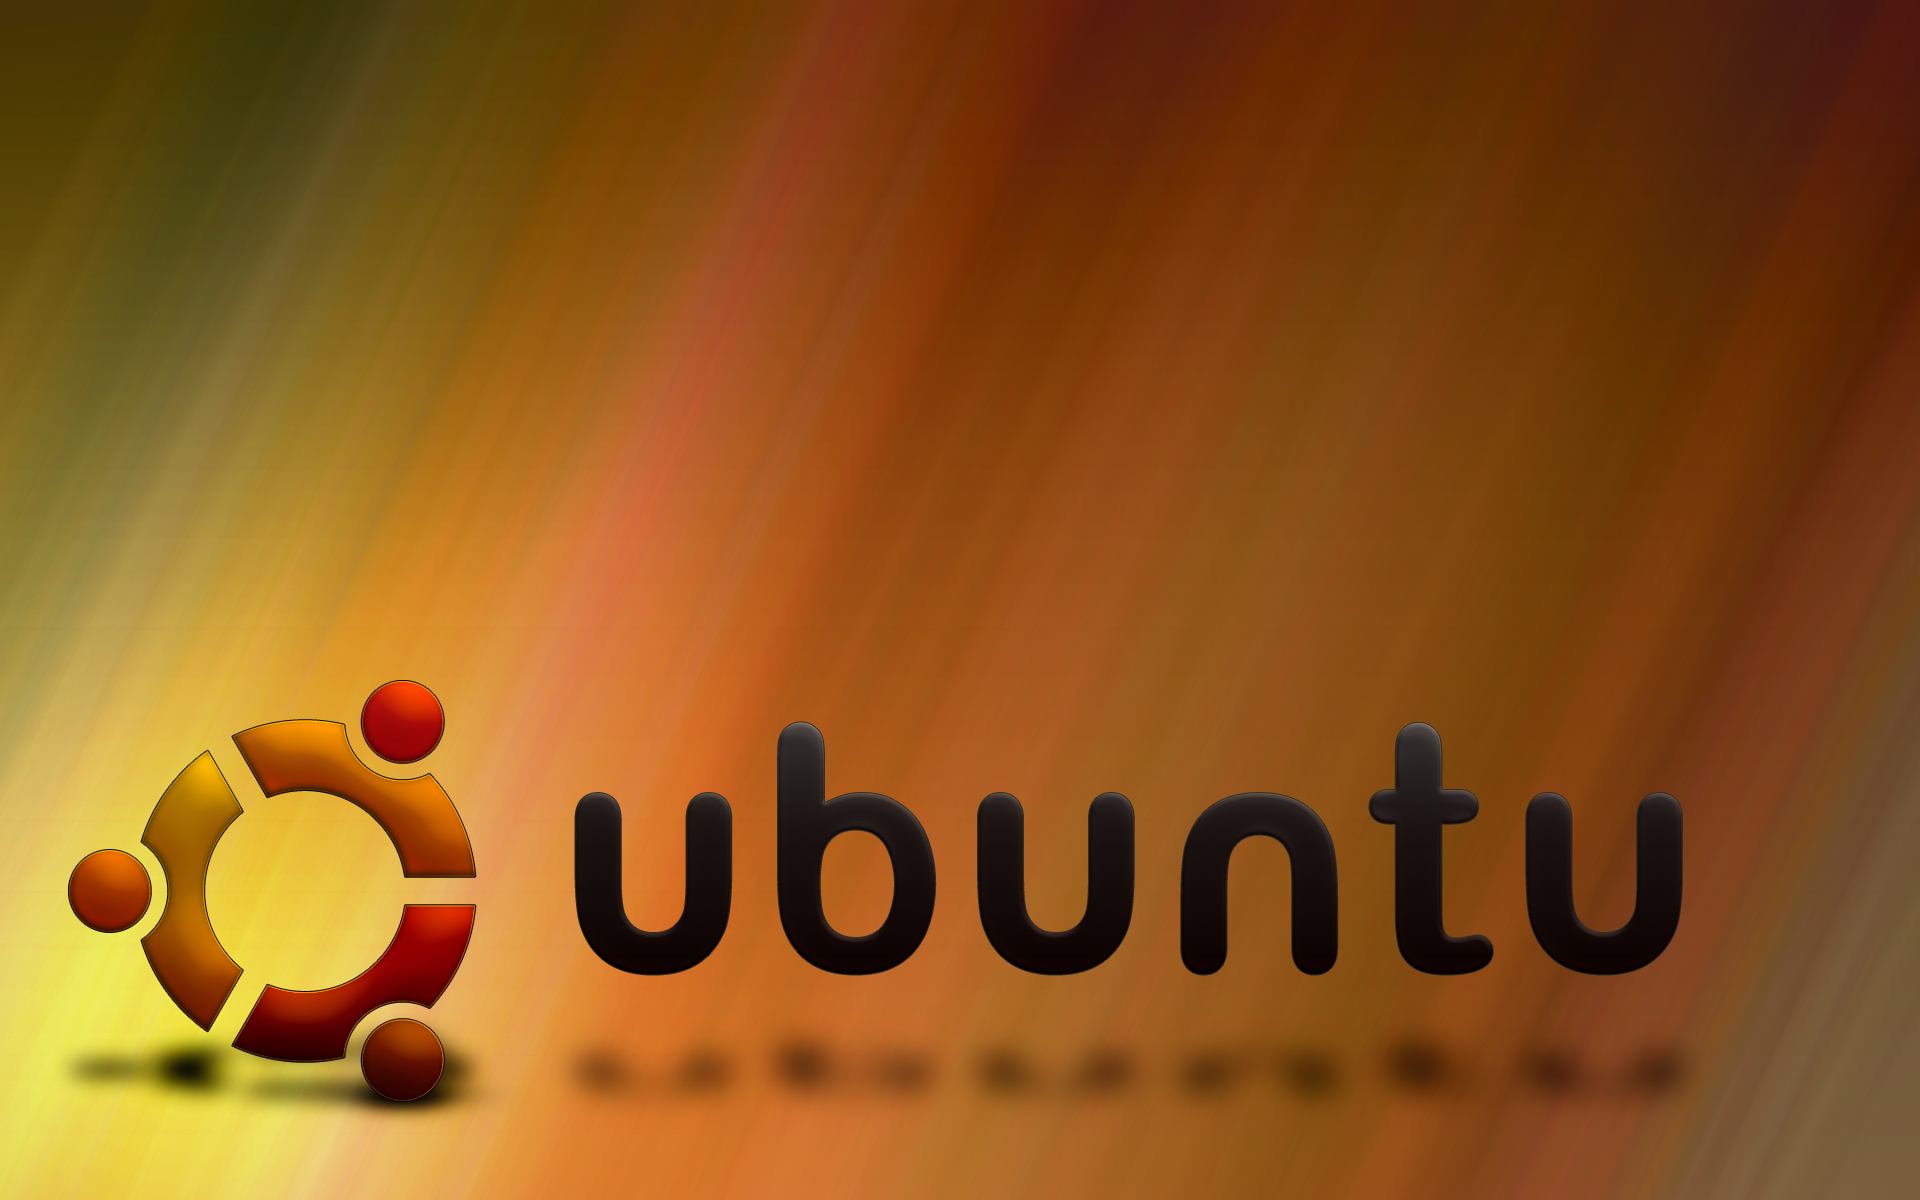 ubuntu wallpaper,text,font,logo,graphics,macro photography